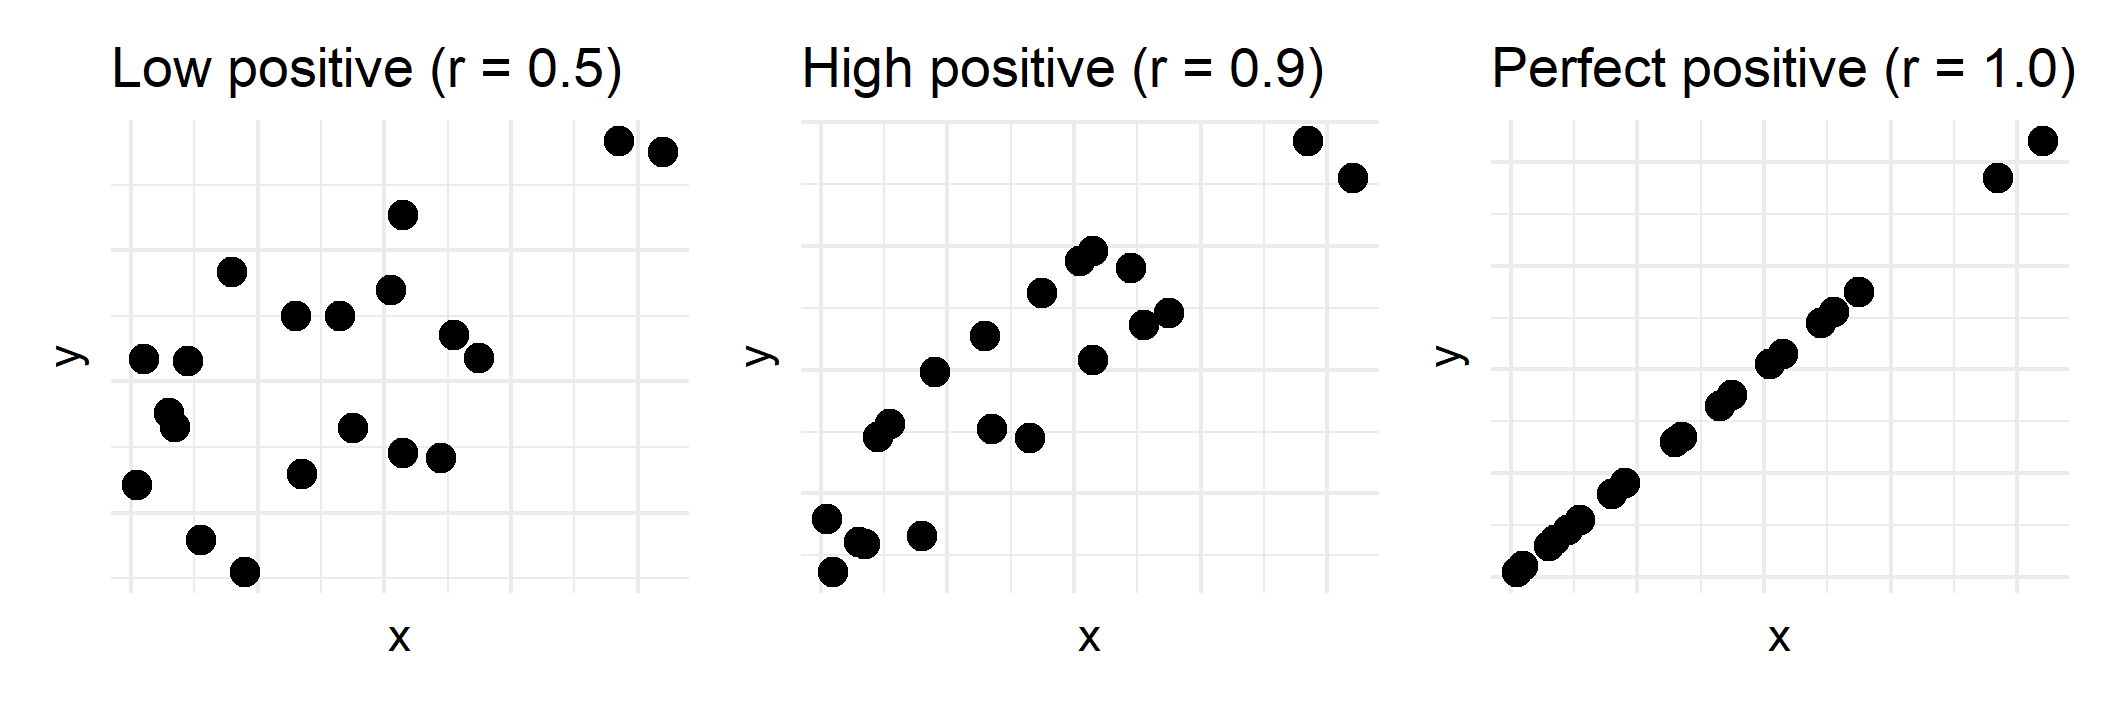 positive_plots-1